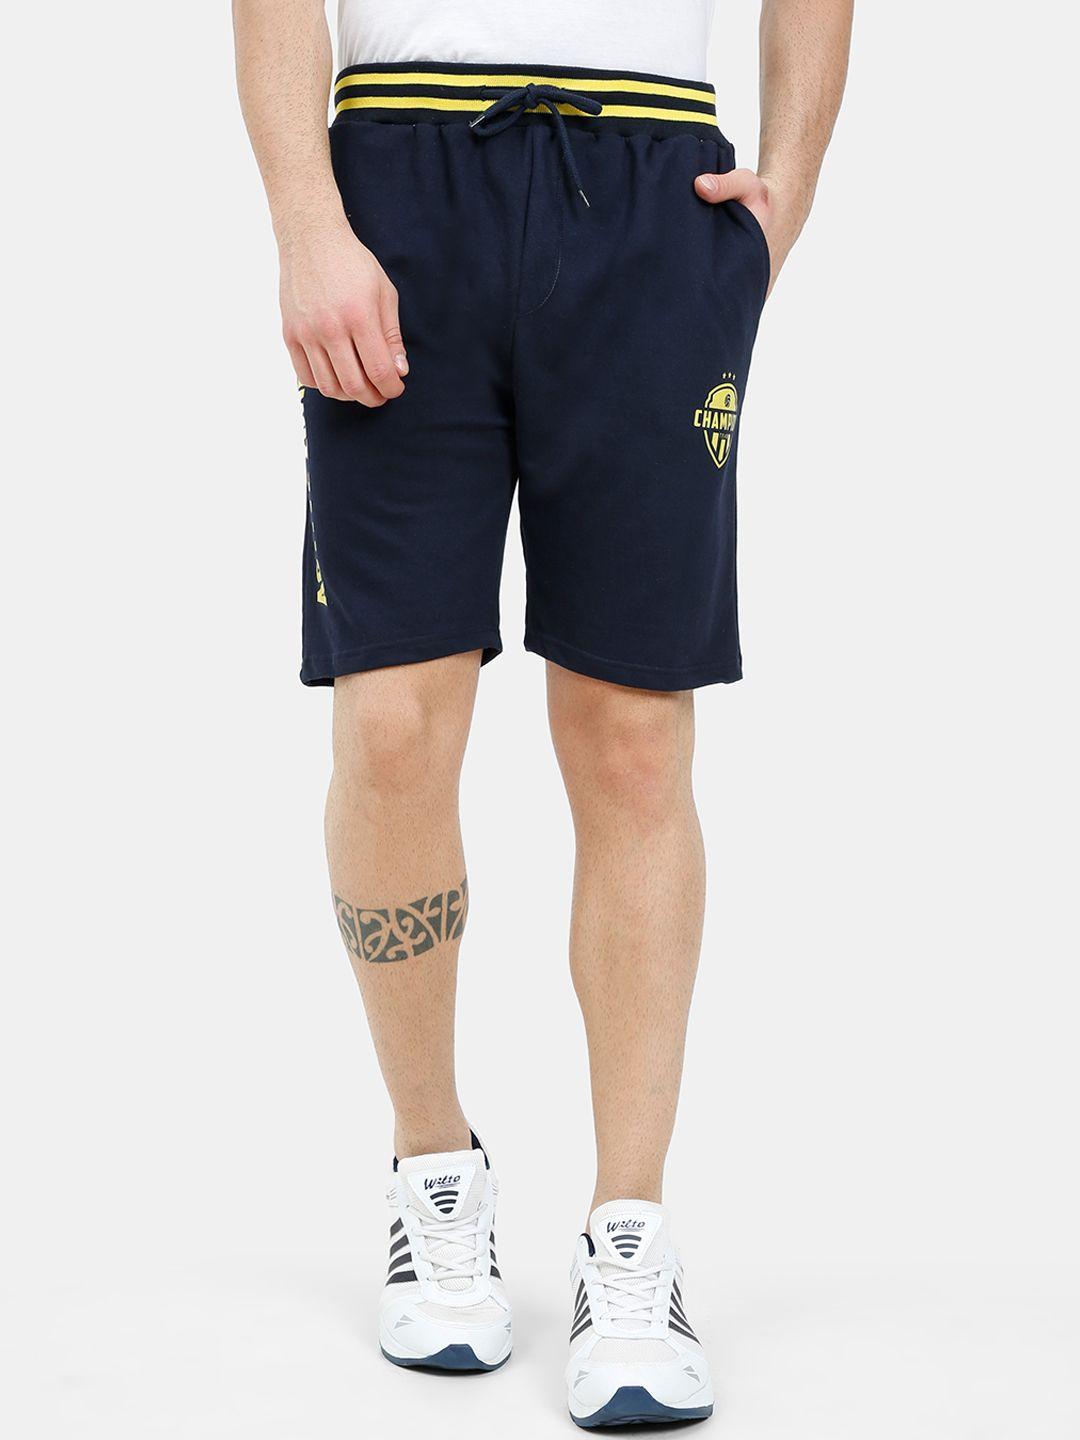 ardeur men navy blue cotton training or gym sports shorts